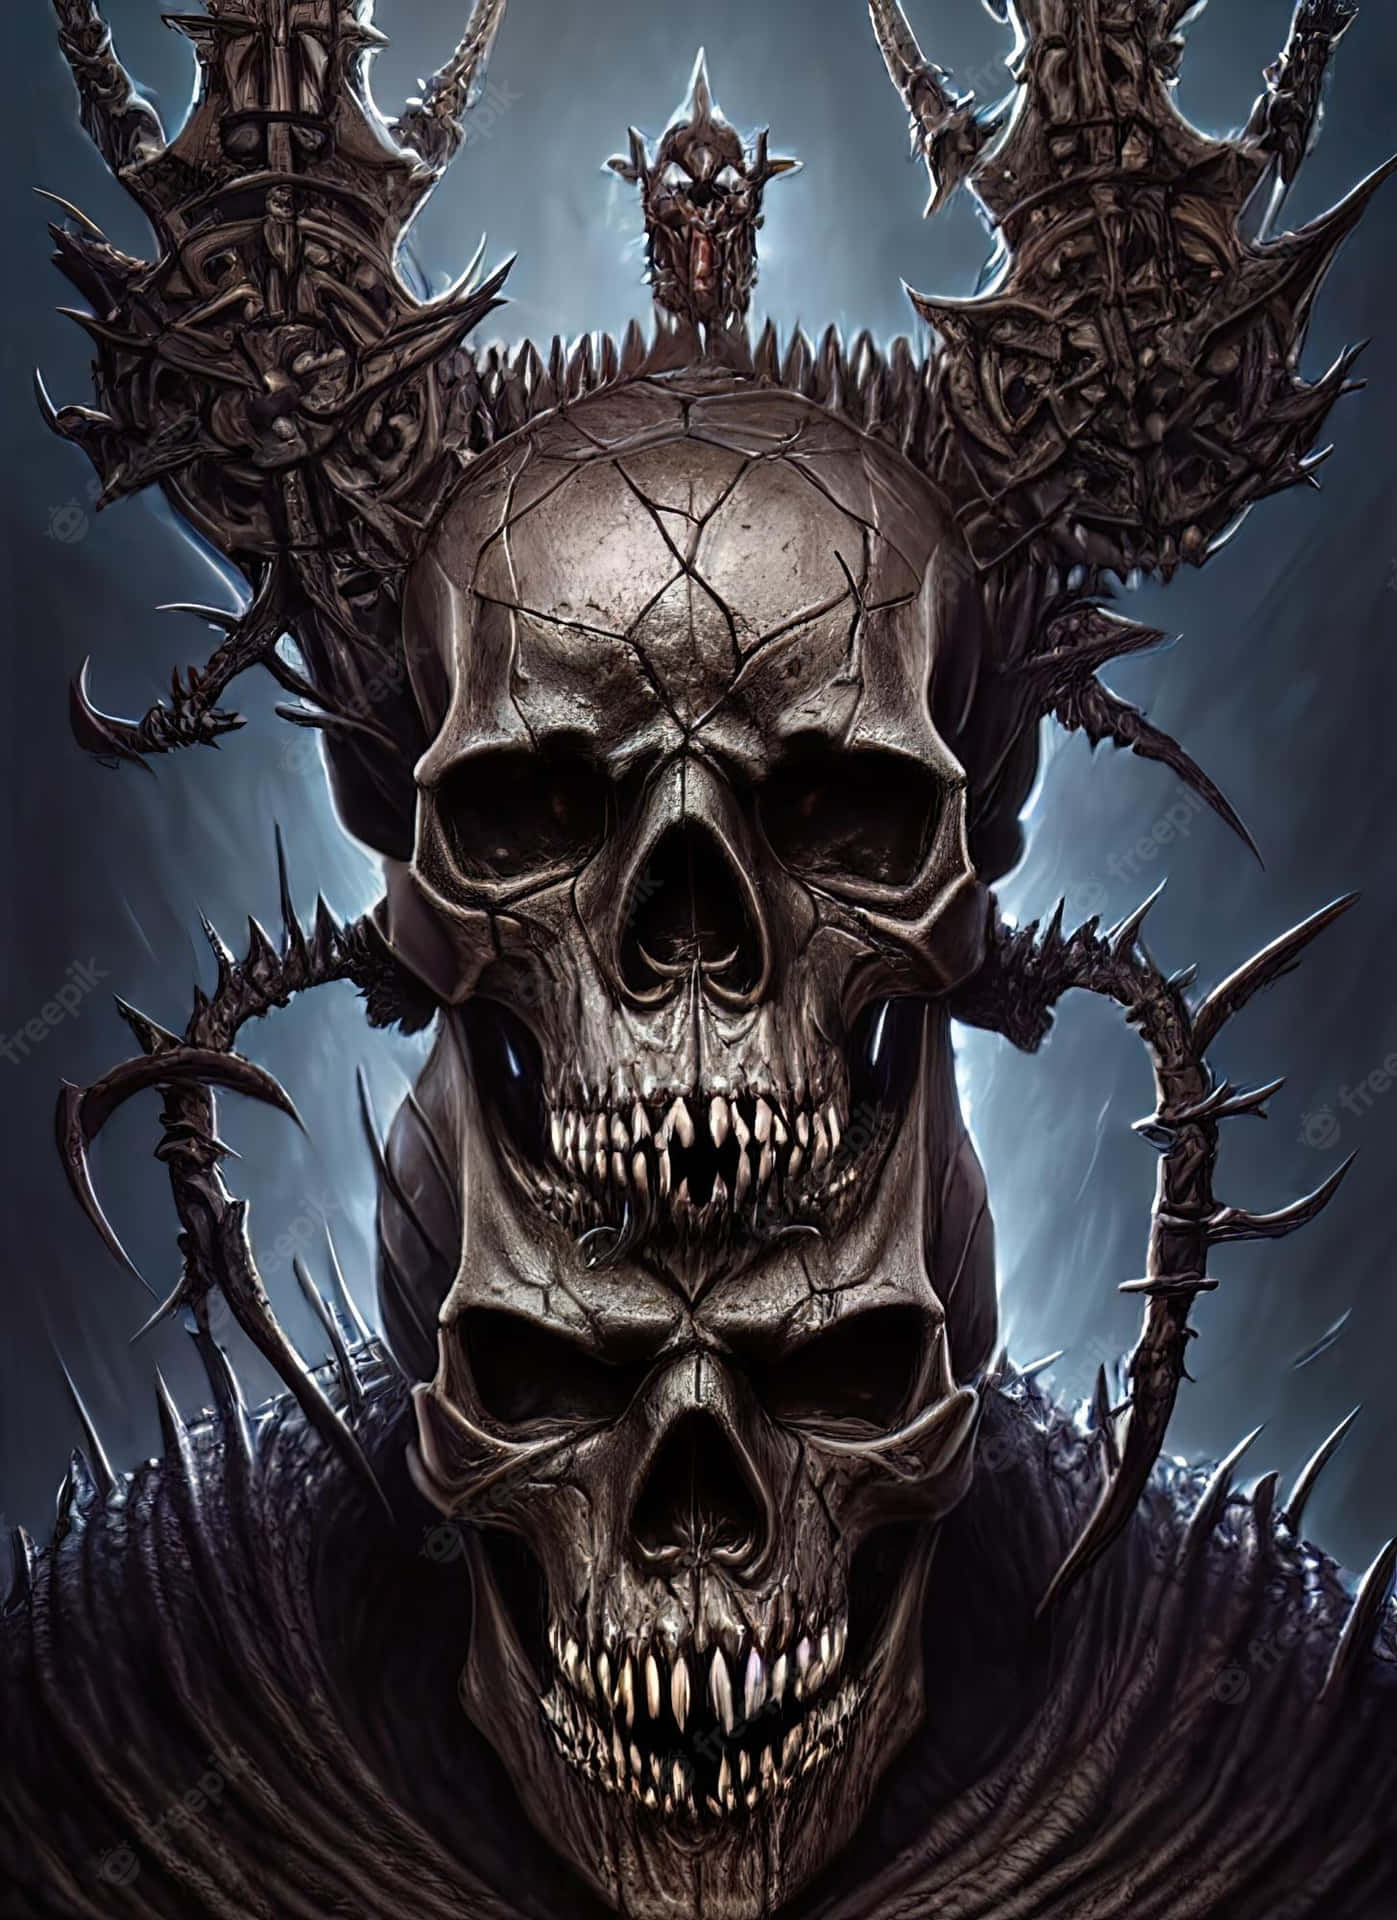 Lurking in the dark, the Evil Skull forebodes danger and an unimaginable doom. Wallpaper